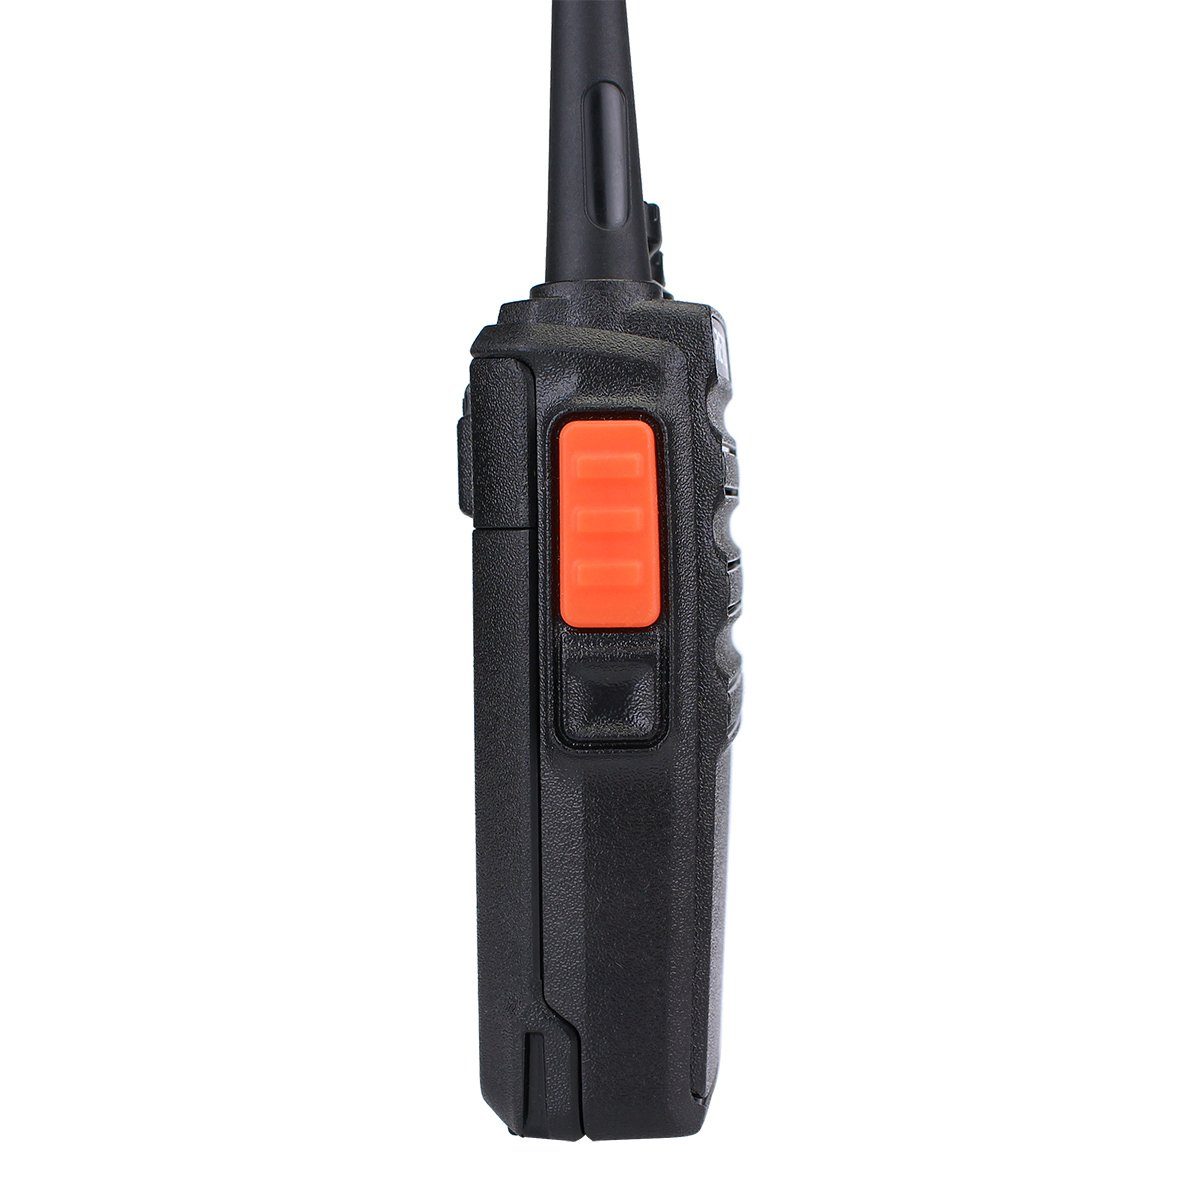 Retevis Walkie Talkie RT24 Freenet Rauschunterdrückung VOX, 6 Lizenzfrei Batterie, schwacher Funkgeräte bei Warnung (PMR446), Kanäle